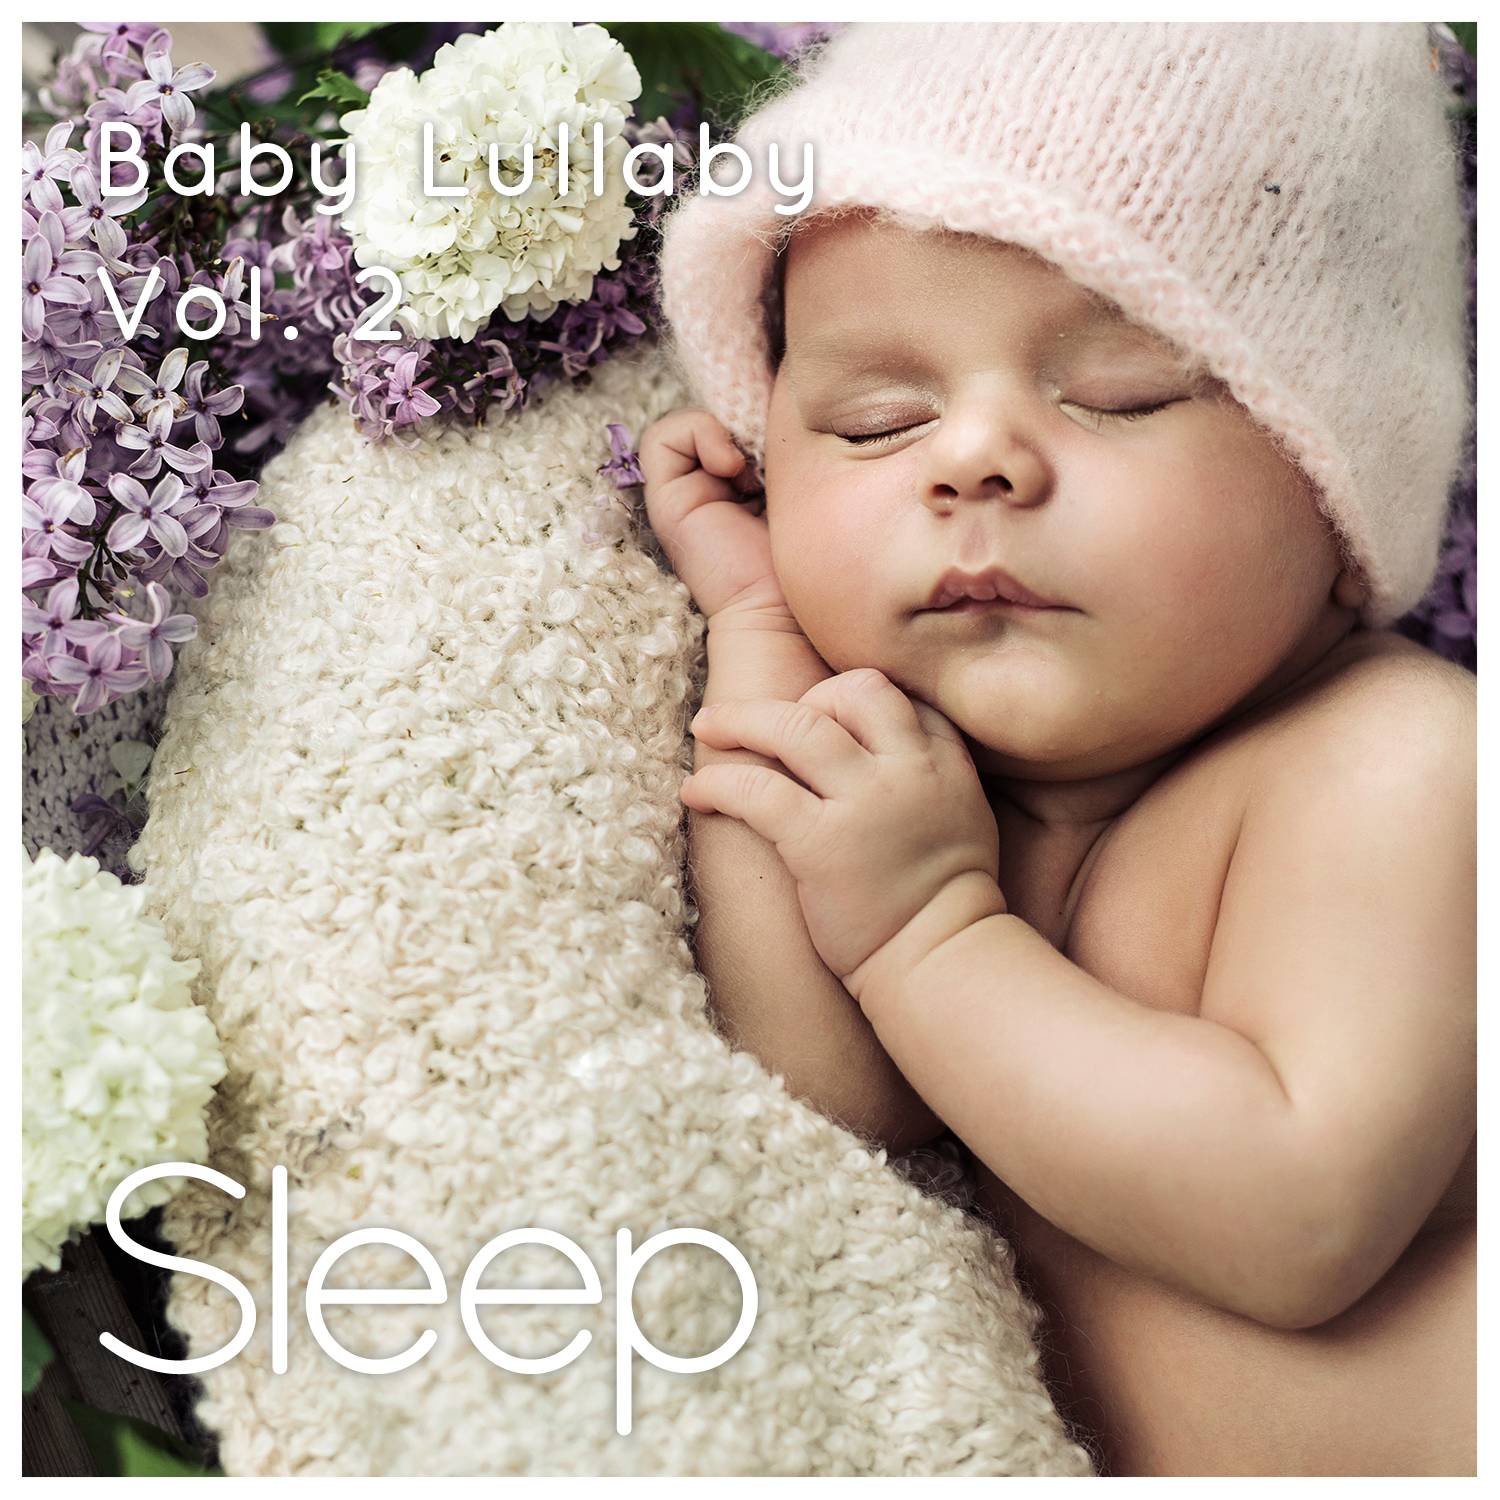 Baby Sleep - The Tumble Dryer Lullaby, Vol. 2